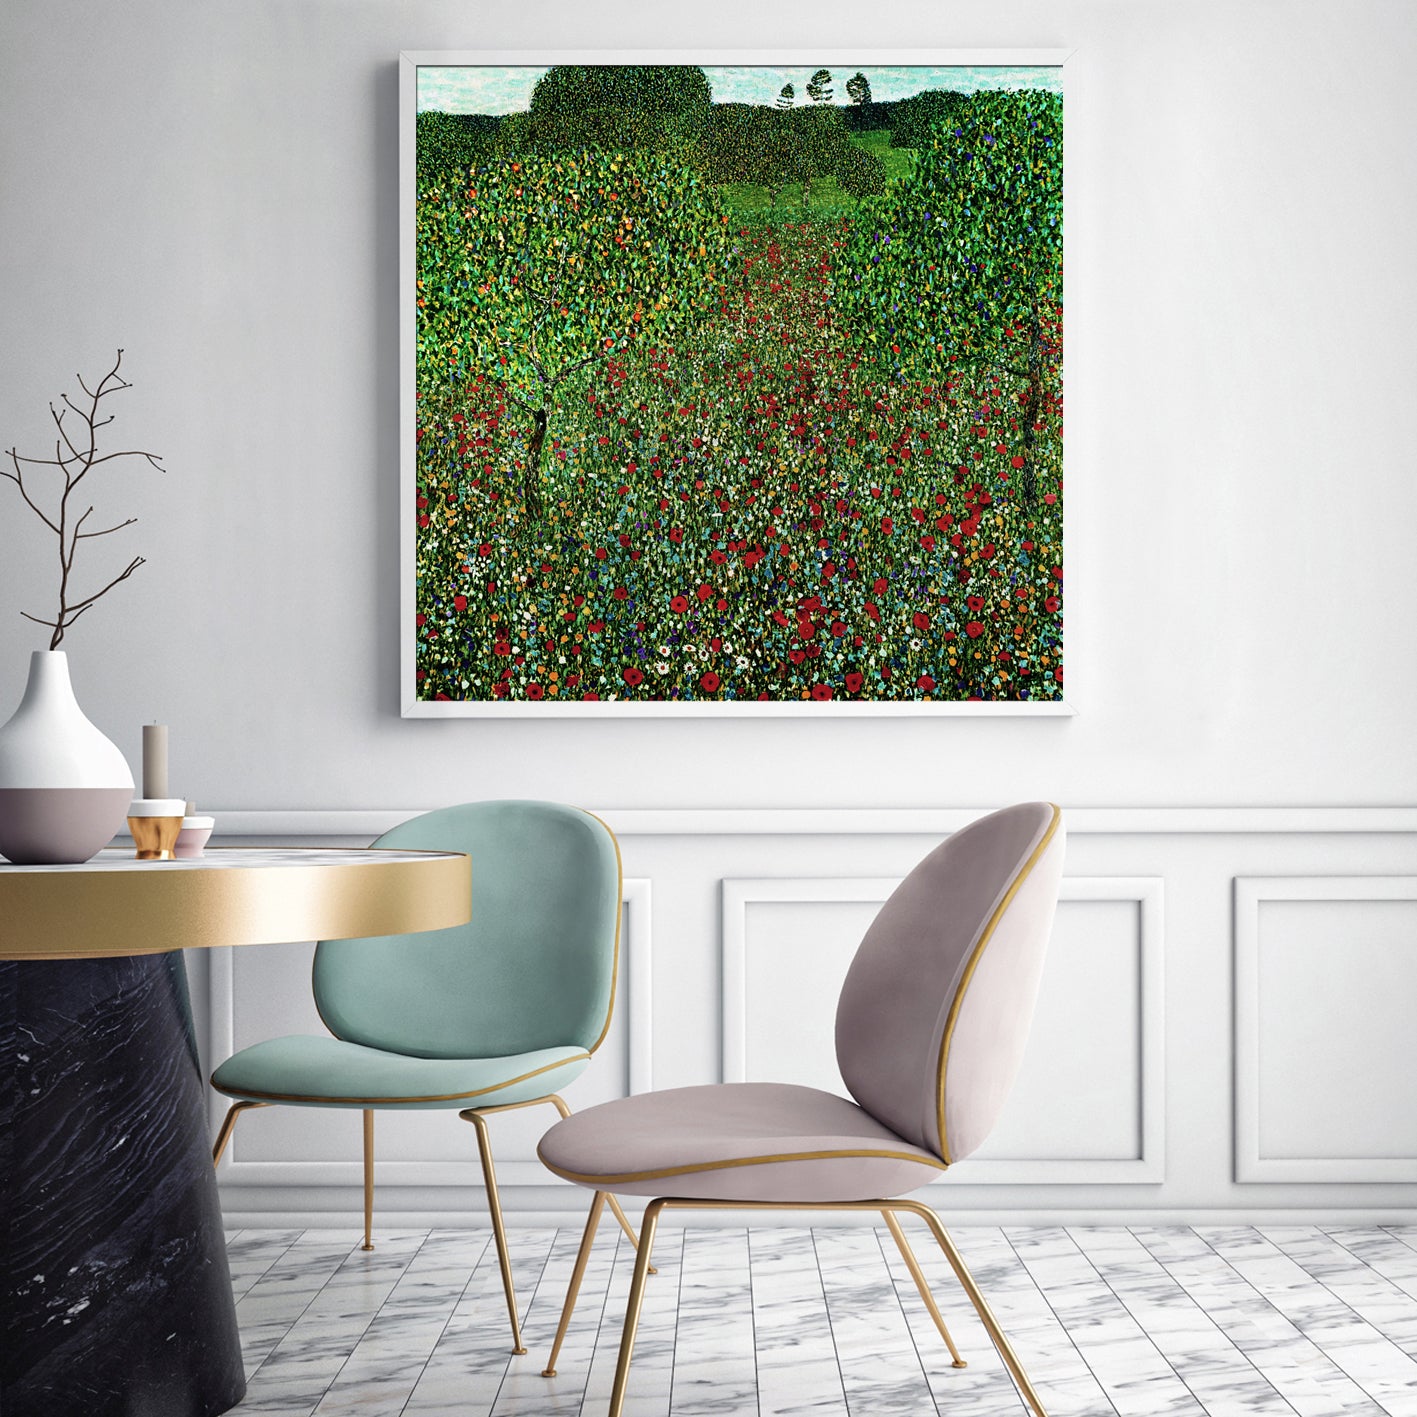 80cmx80cm Field of Poppies by Gustav Klimt White Frame Canvas Wall Art